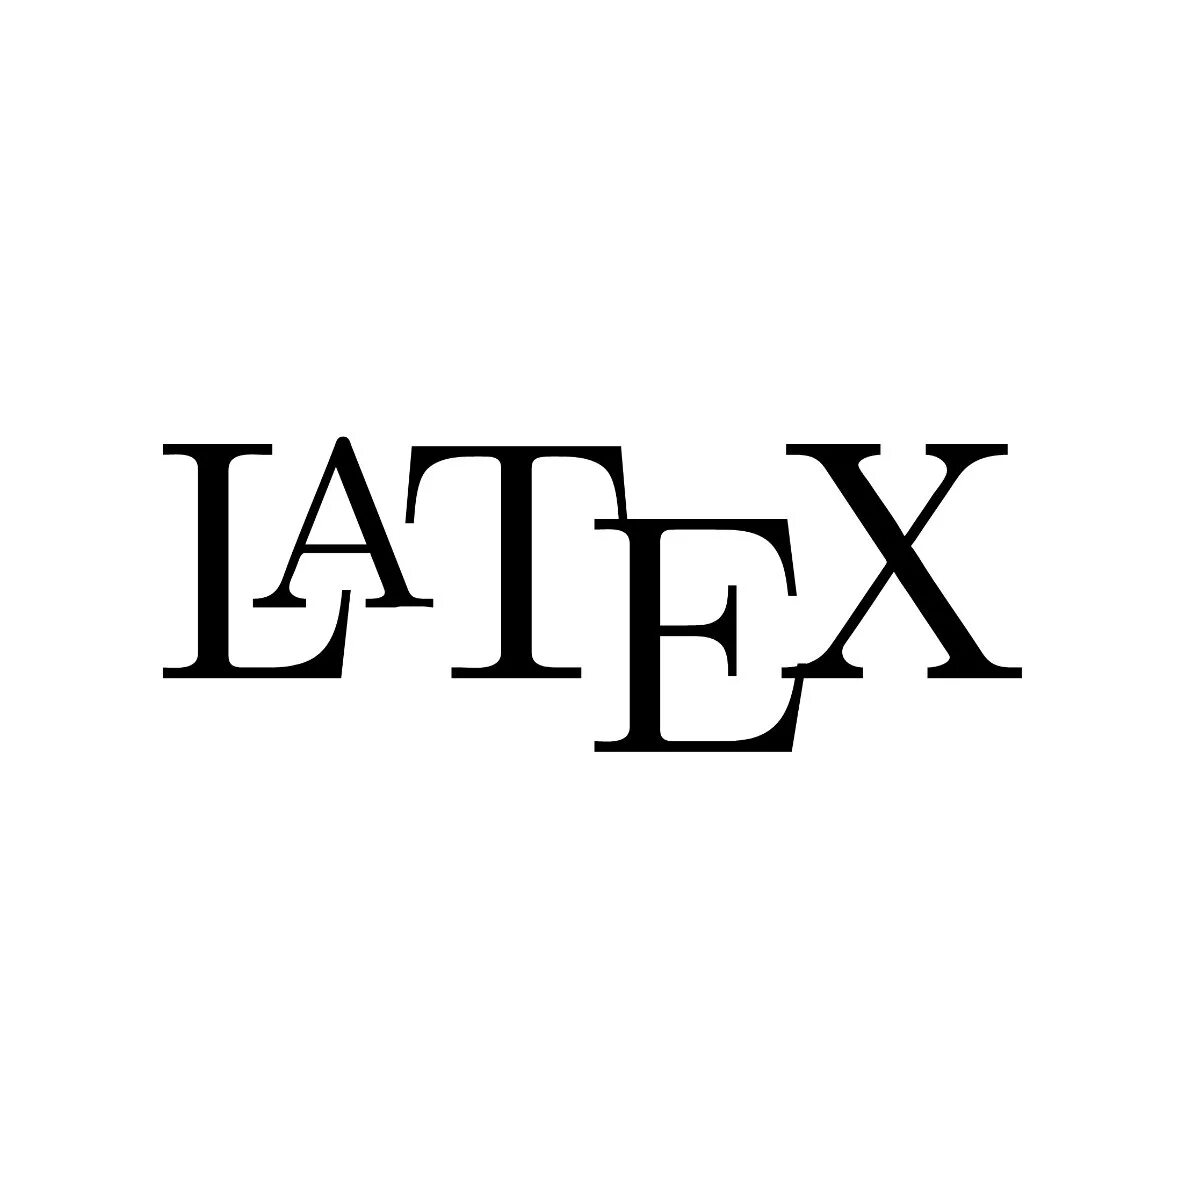 Latex значки. Latex программа. Значок латекс. Tex язык программирования. Latex math